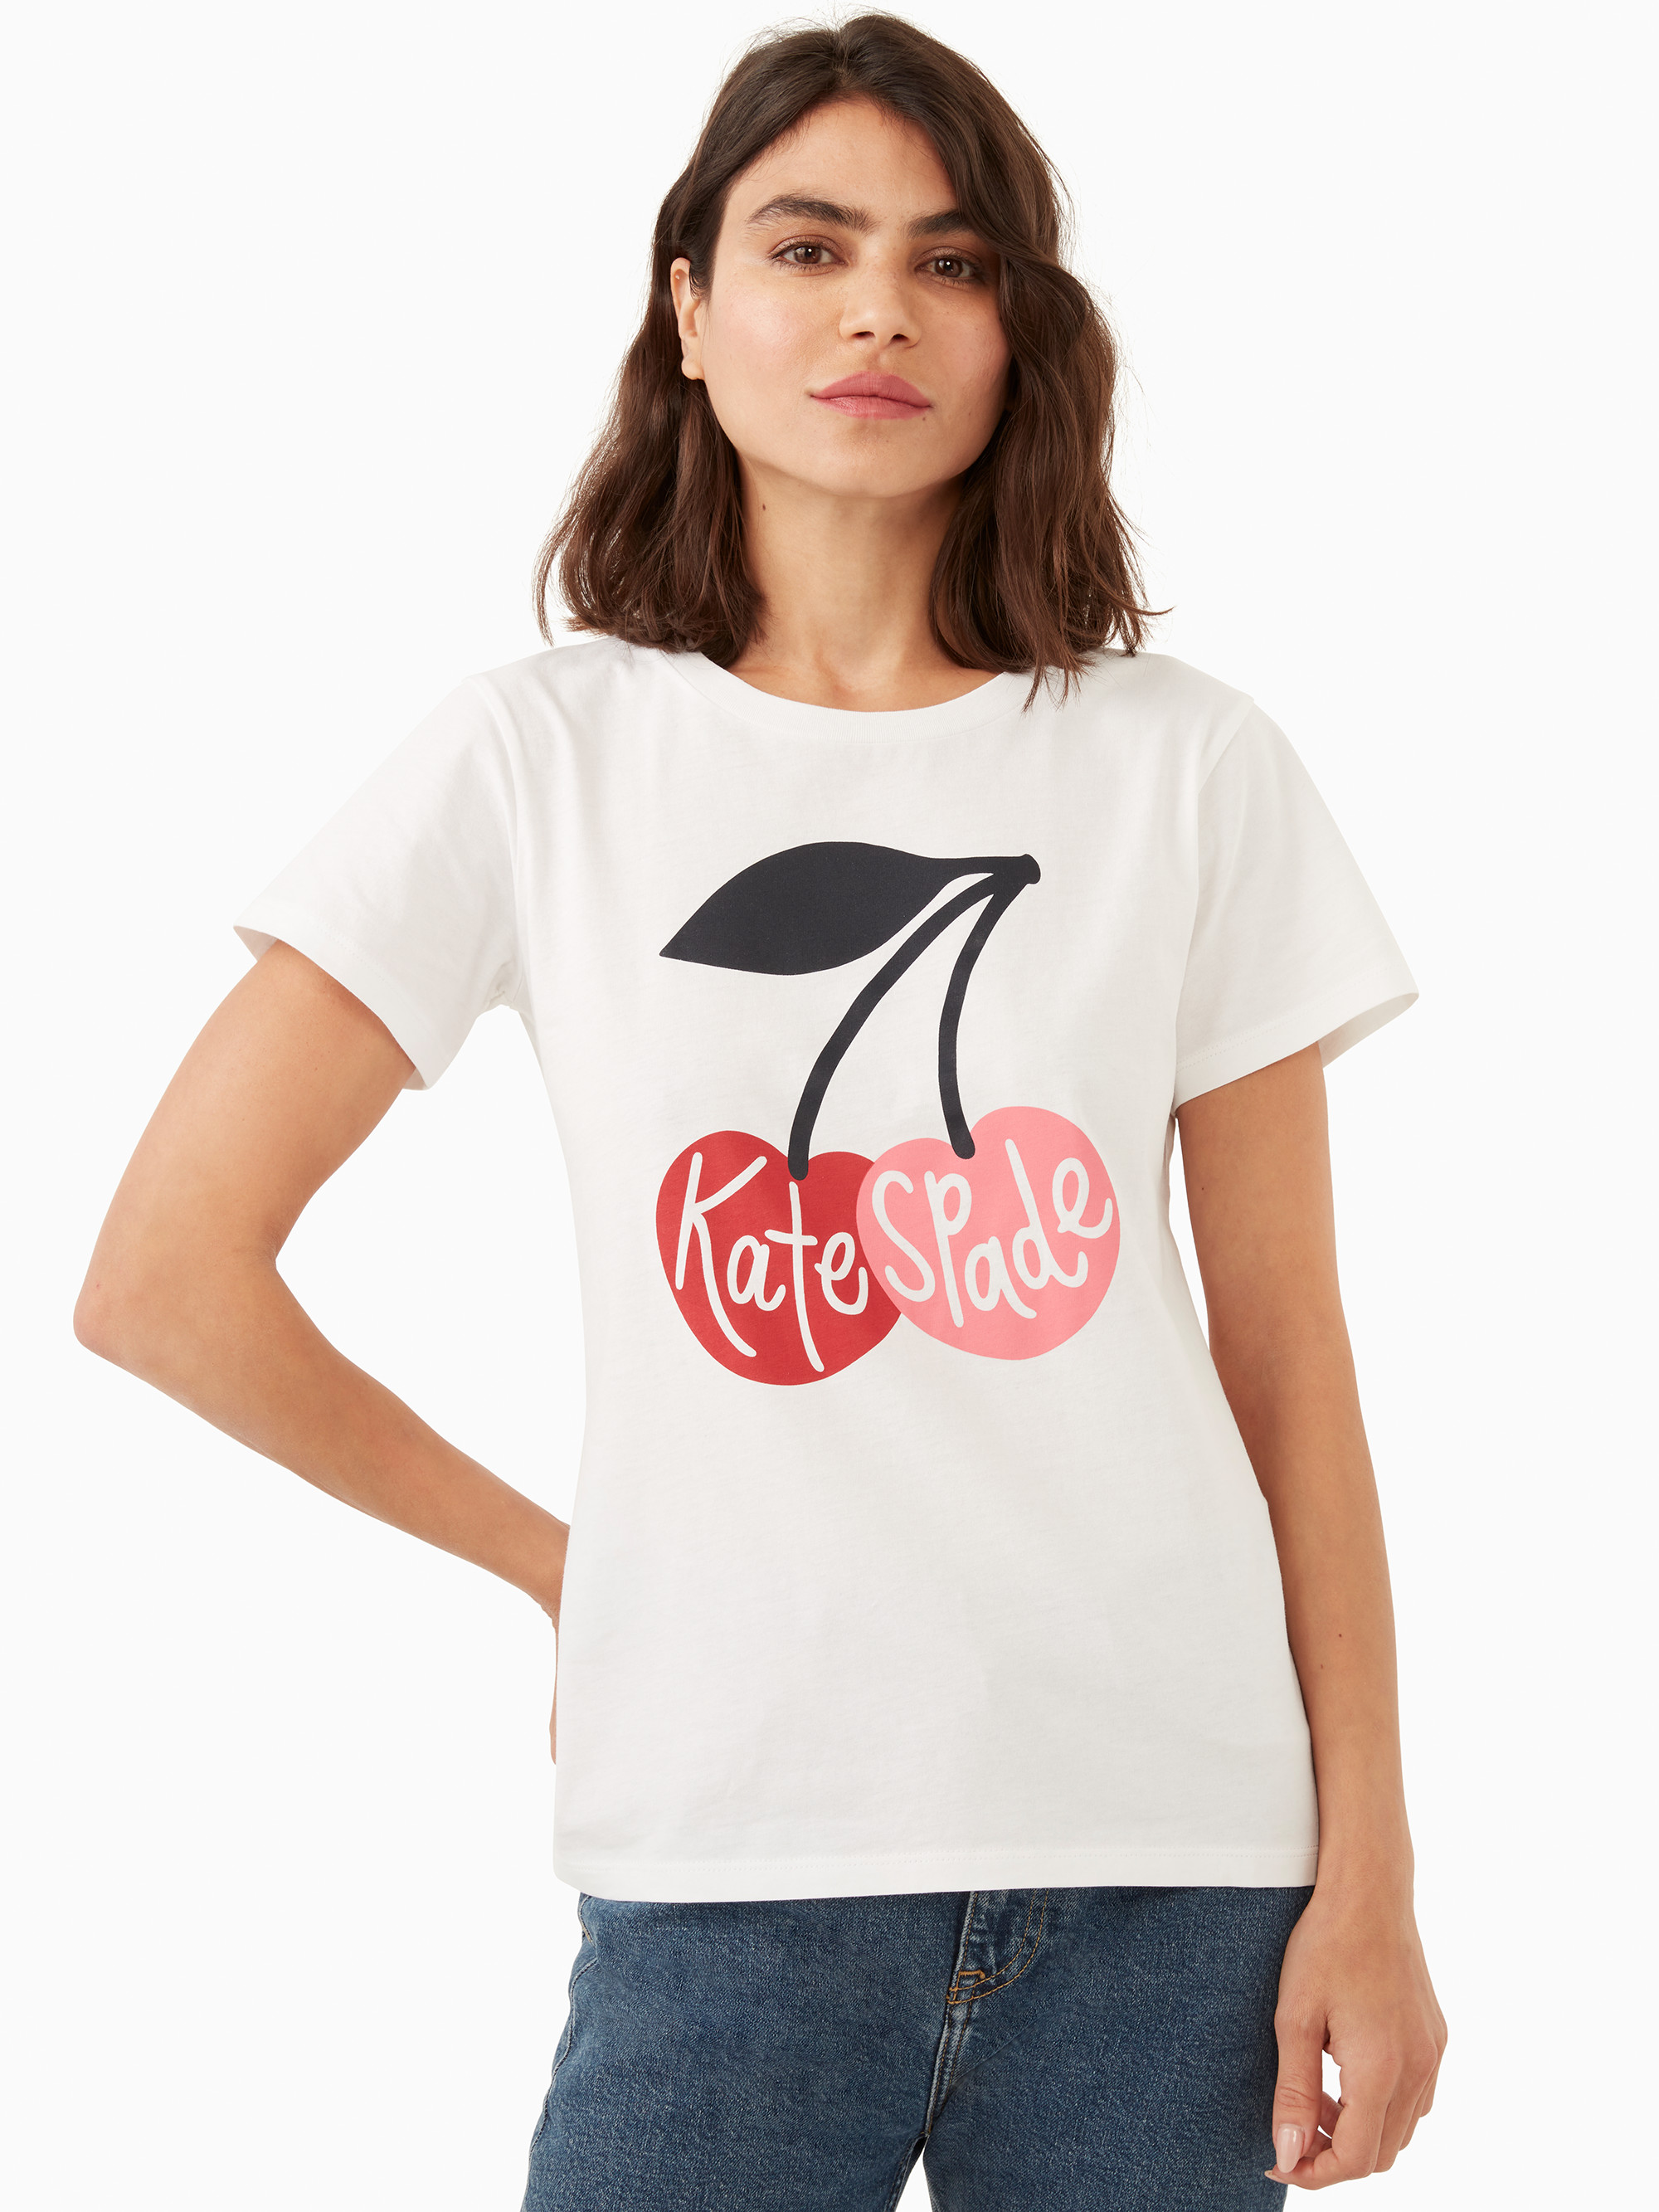 Kate Spade Cherry T-shirt